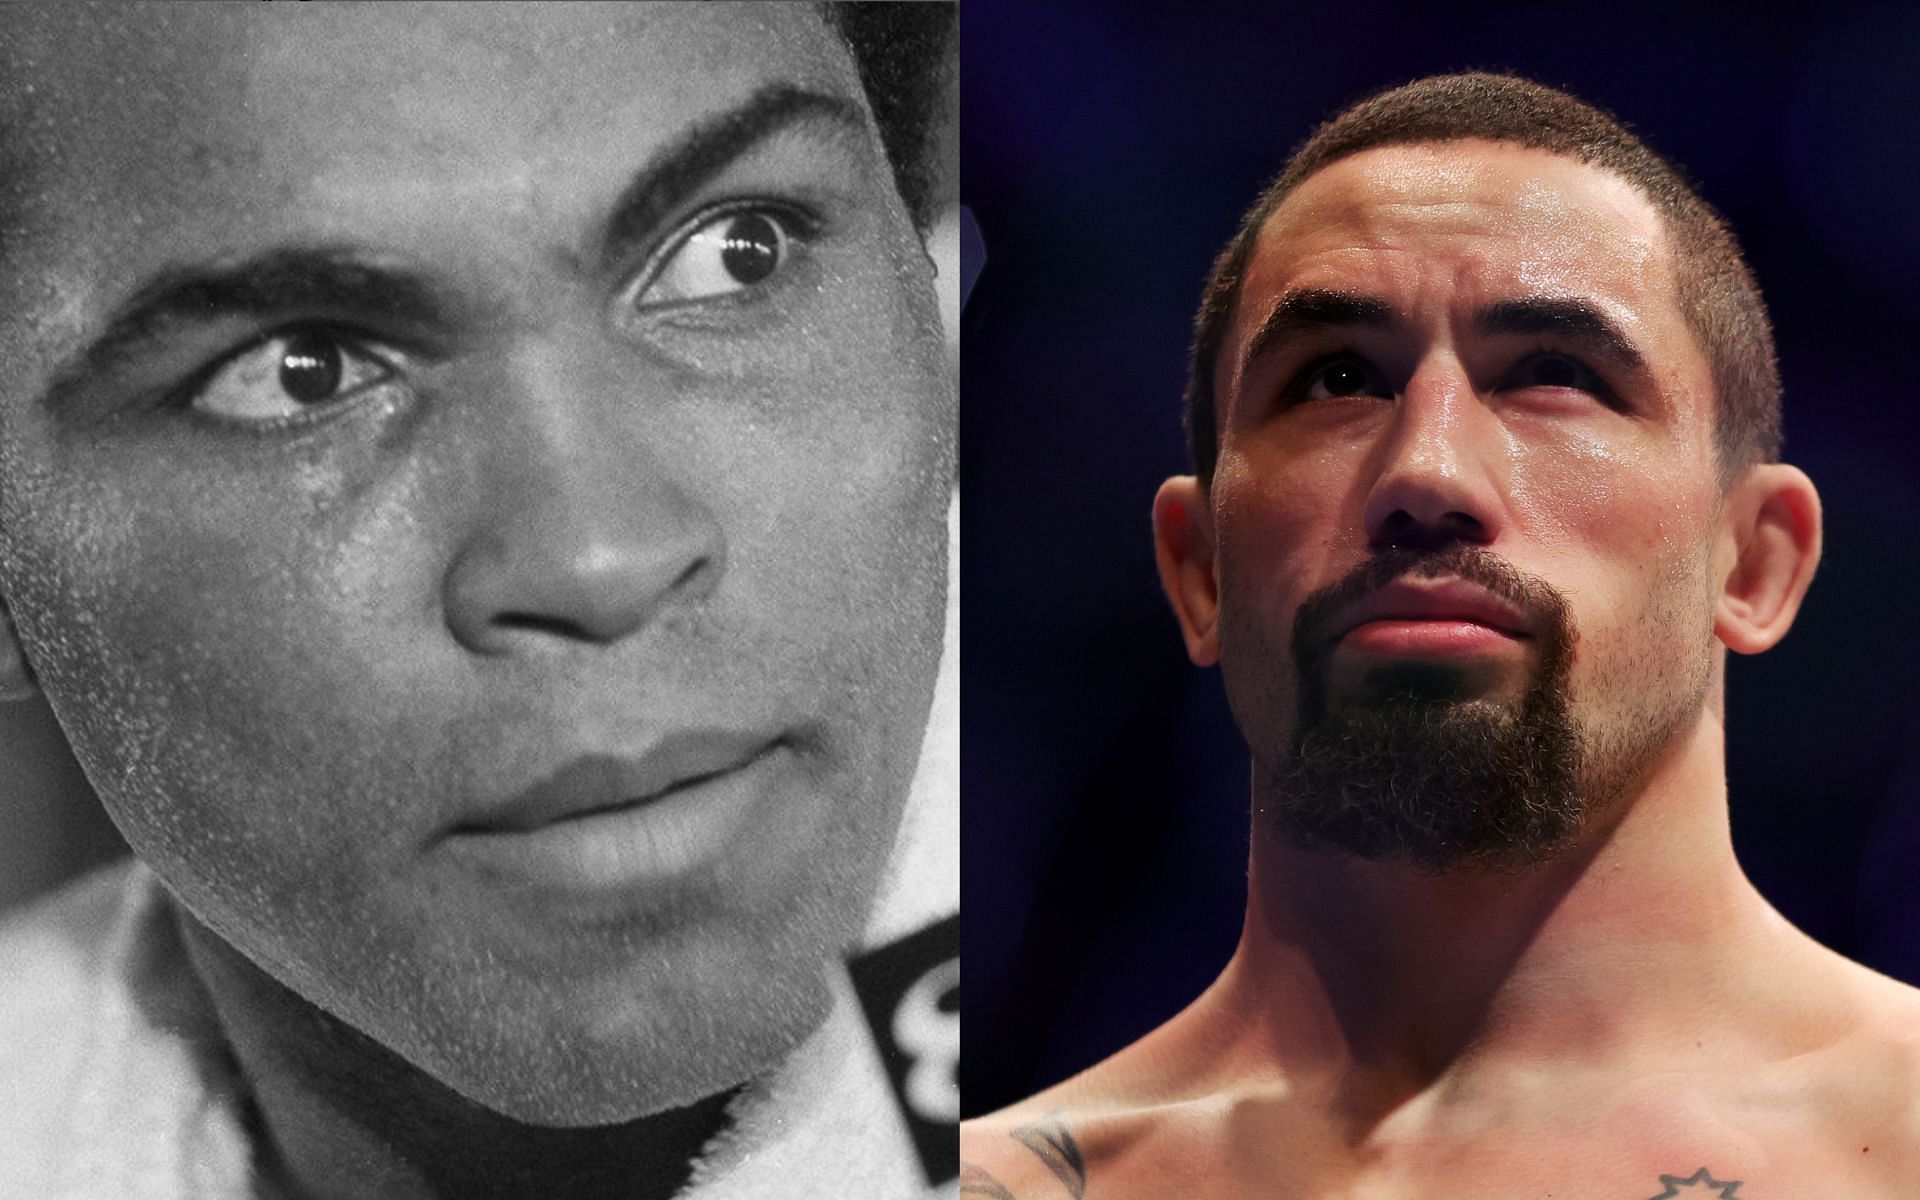 Muhammad Ali (left), Robert Whittaker (right) [Image courtesy of @muhammadali on Instagram]